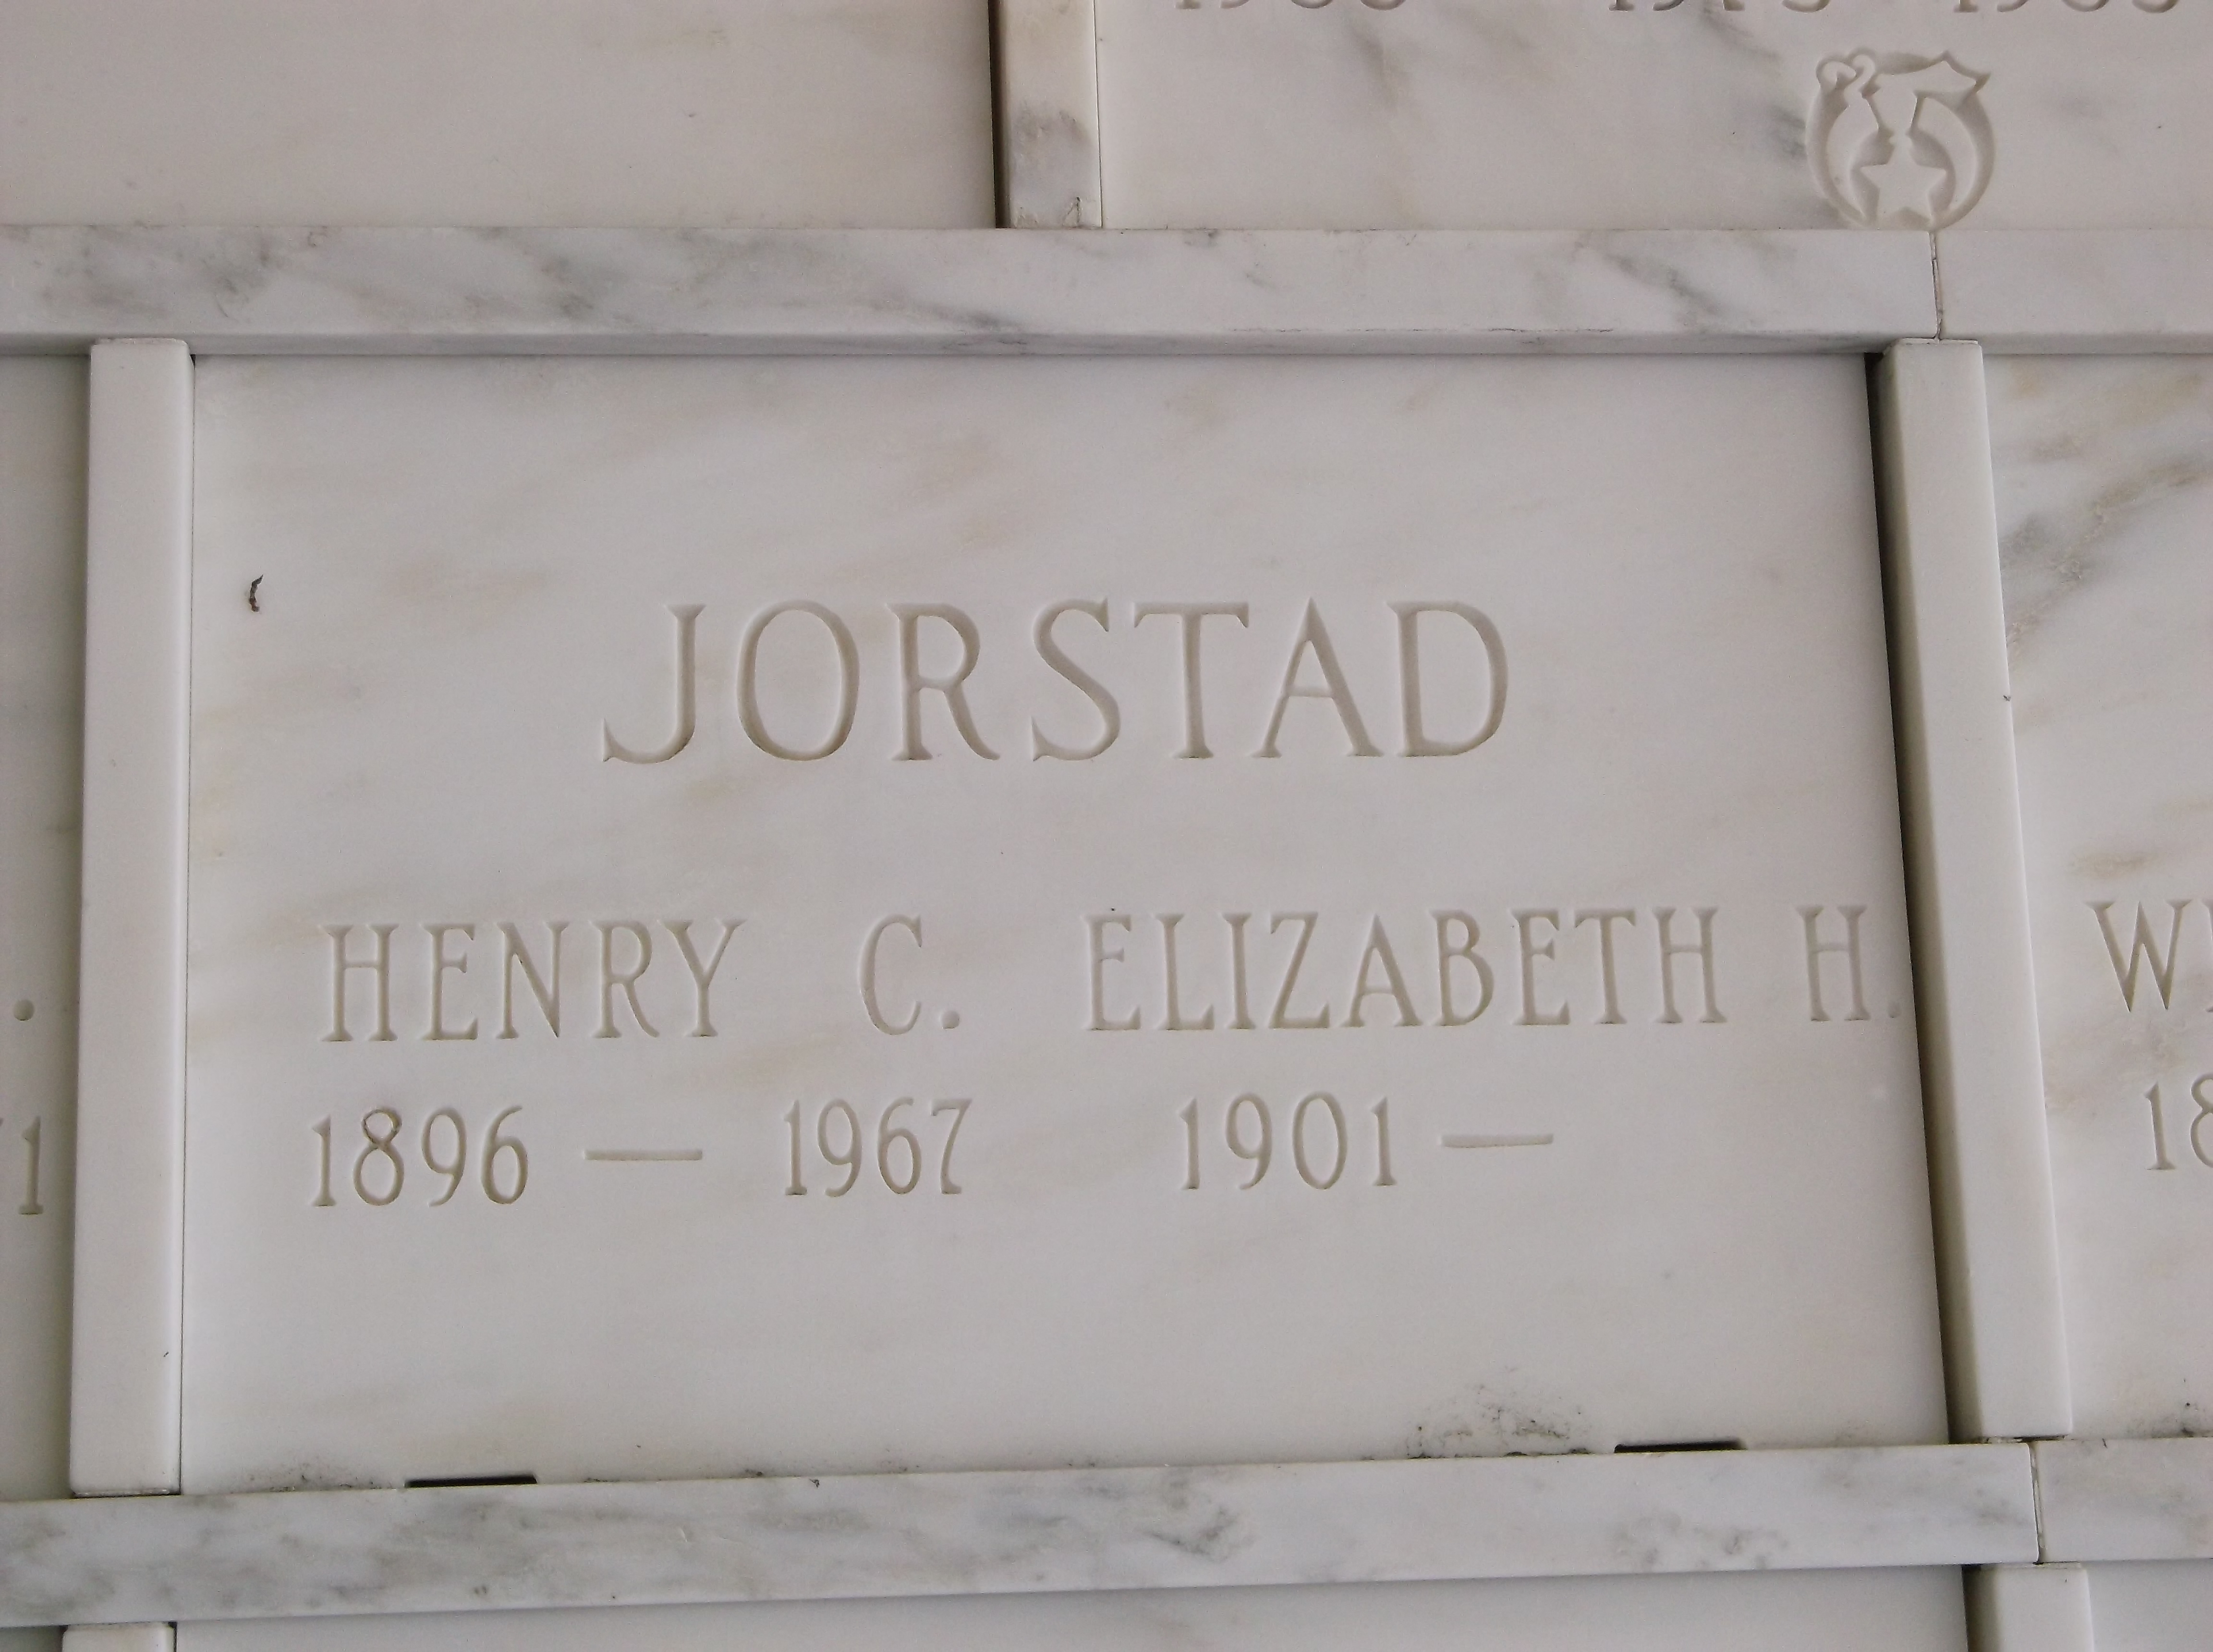 Elizabeth H Jorstad